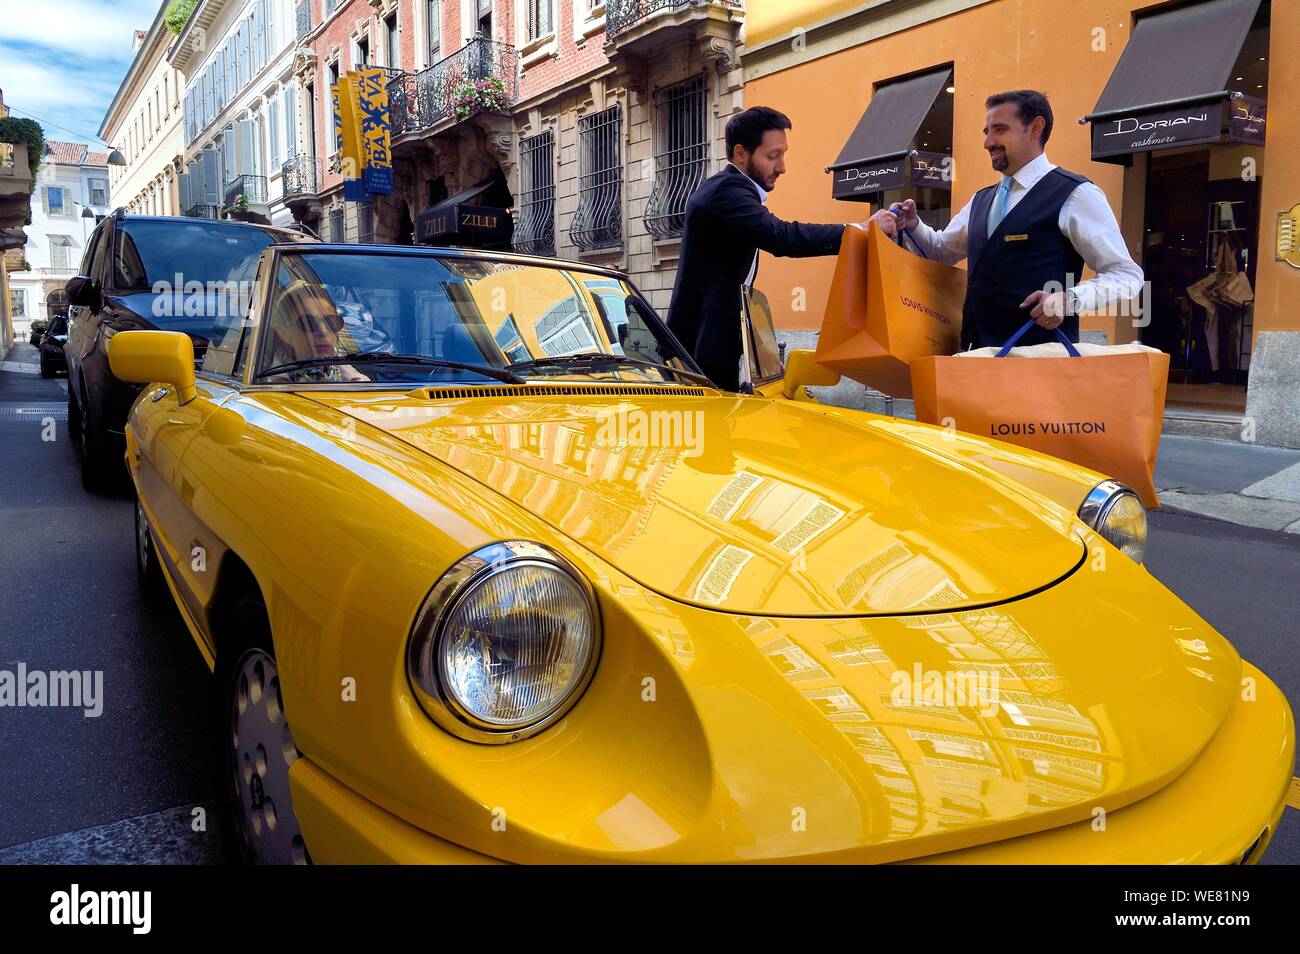 Italien, Lombardei, Mailand, Mode Viereck (Quadrilatero della moda), Alfa Romeo Duetto Spider gelb Cabrio vor dem Four Seasons Hotel Milano, der Portier bringt eine Vuitton Tasche Stockfoto